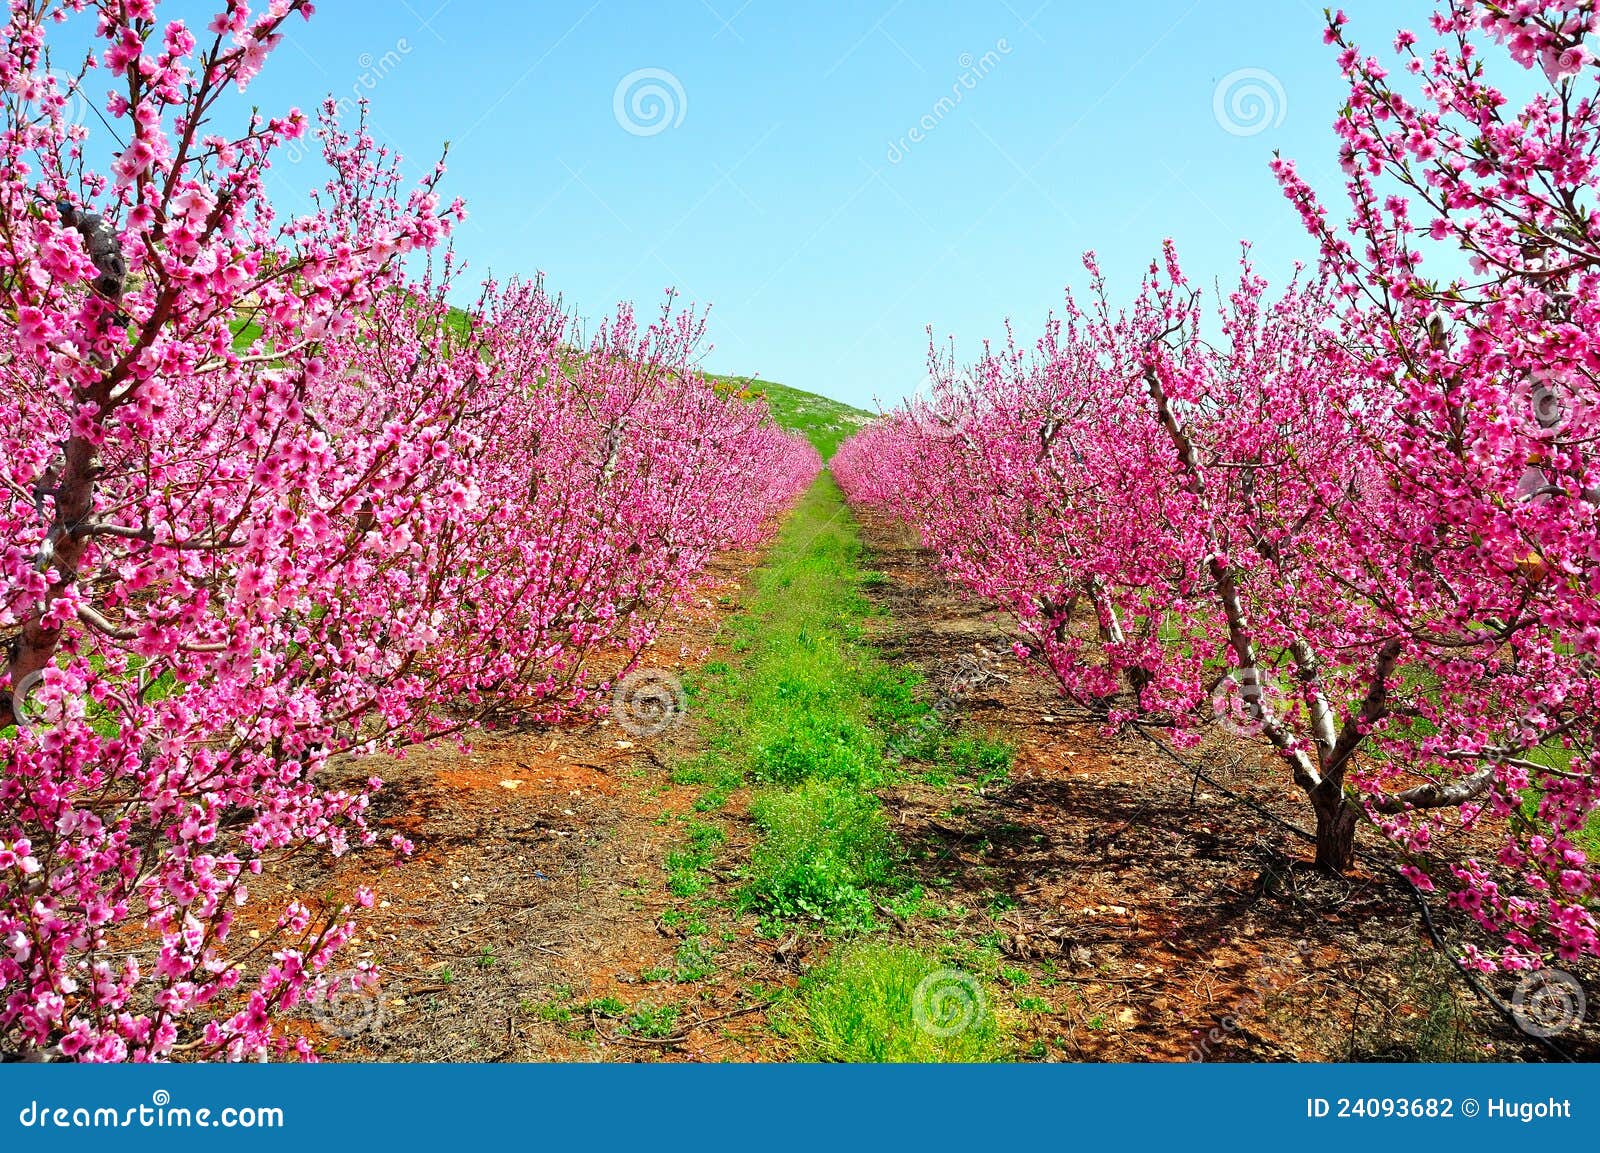 pink nectarine trees, israel